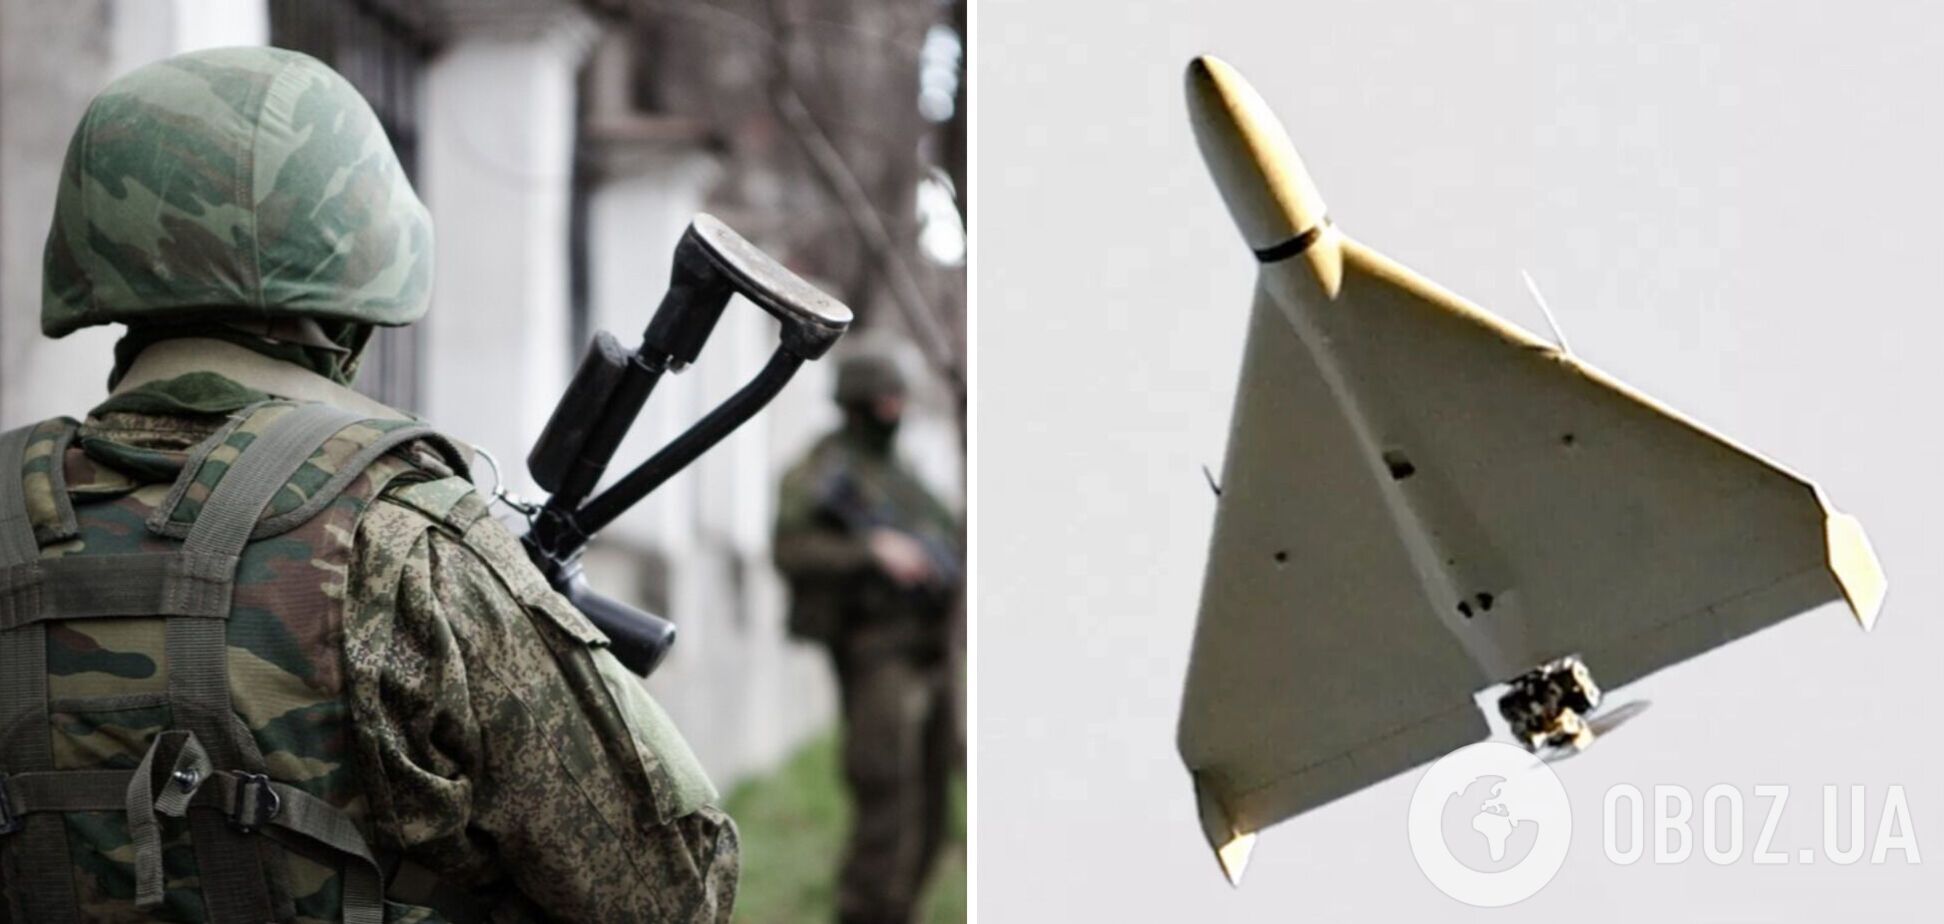 Российская атака дронами типа Shahed по Украине